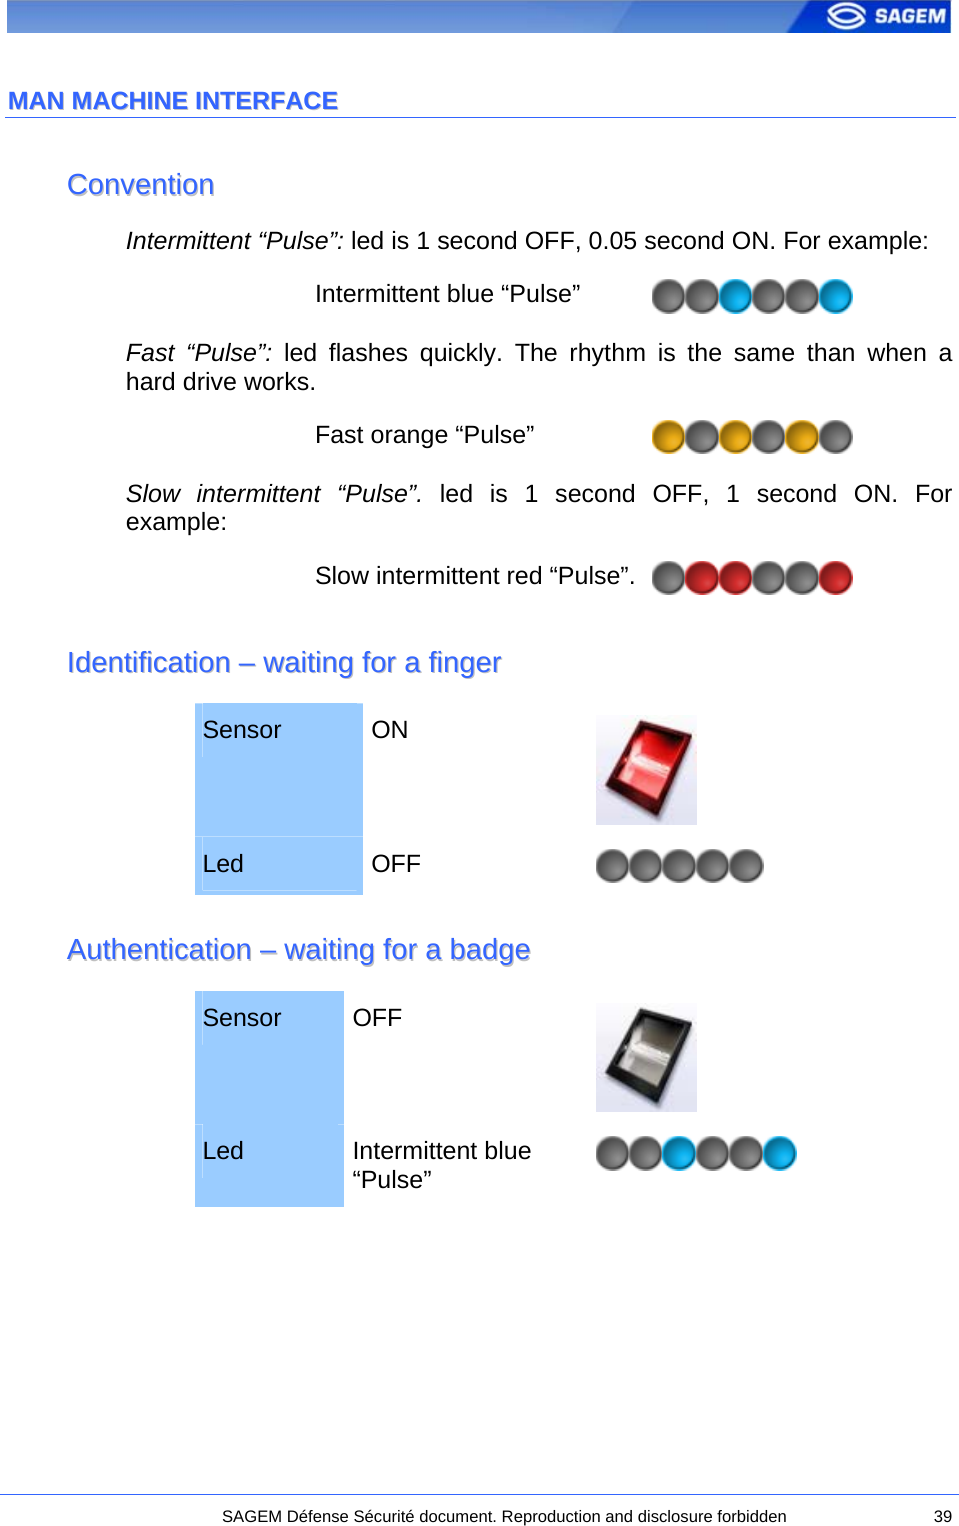  MMAANN  MMAACCHHIINNEE  IINNTTEERRFFAACCEE  CCoonnvveennttiioonn  Intermittent “Pulse”: led is 1 second OFF, 0.05 second ON. For example: Intermittent blue “Pulse”   Fast “Pulse”: led flashes quickly. The rhythm is the same than when a hard drive works. Fast orange “Pulse”   Slow intermittent “Pulse”. led is 1 second OFF, 1 second ON. For example: Slow intermittent red “Pulse”.  IIddeennttiiffiiccaattiioonn  ––  wwaaiittiinngg  ffoorr  aa  ffiinnggeerr  Sensor  ON  Led  OFF   AAuutthheennttiiccaattiioonn  ––  wwaaiittiinngg  ffoorr  aa  bbaaddggee  Sensor  OFF  Led  Intermittent blue “Pulse”      SAGEM Défense Sécurité document. Reproduction and disclosure forbidden  39 